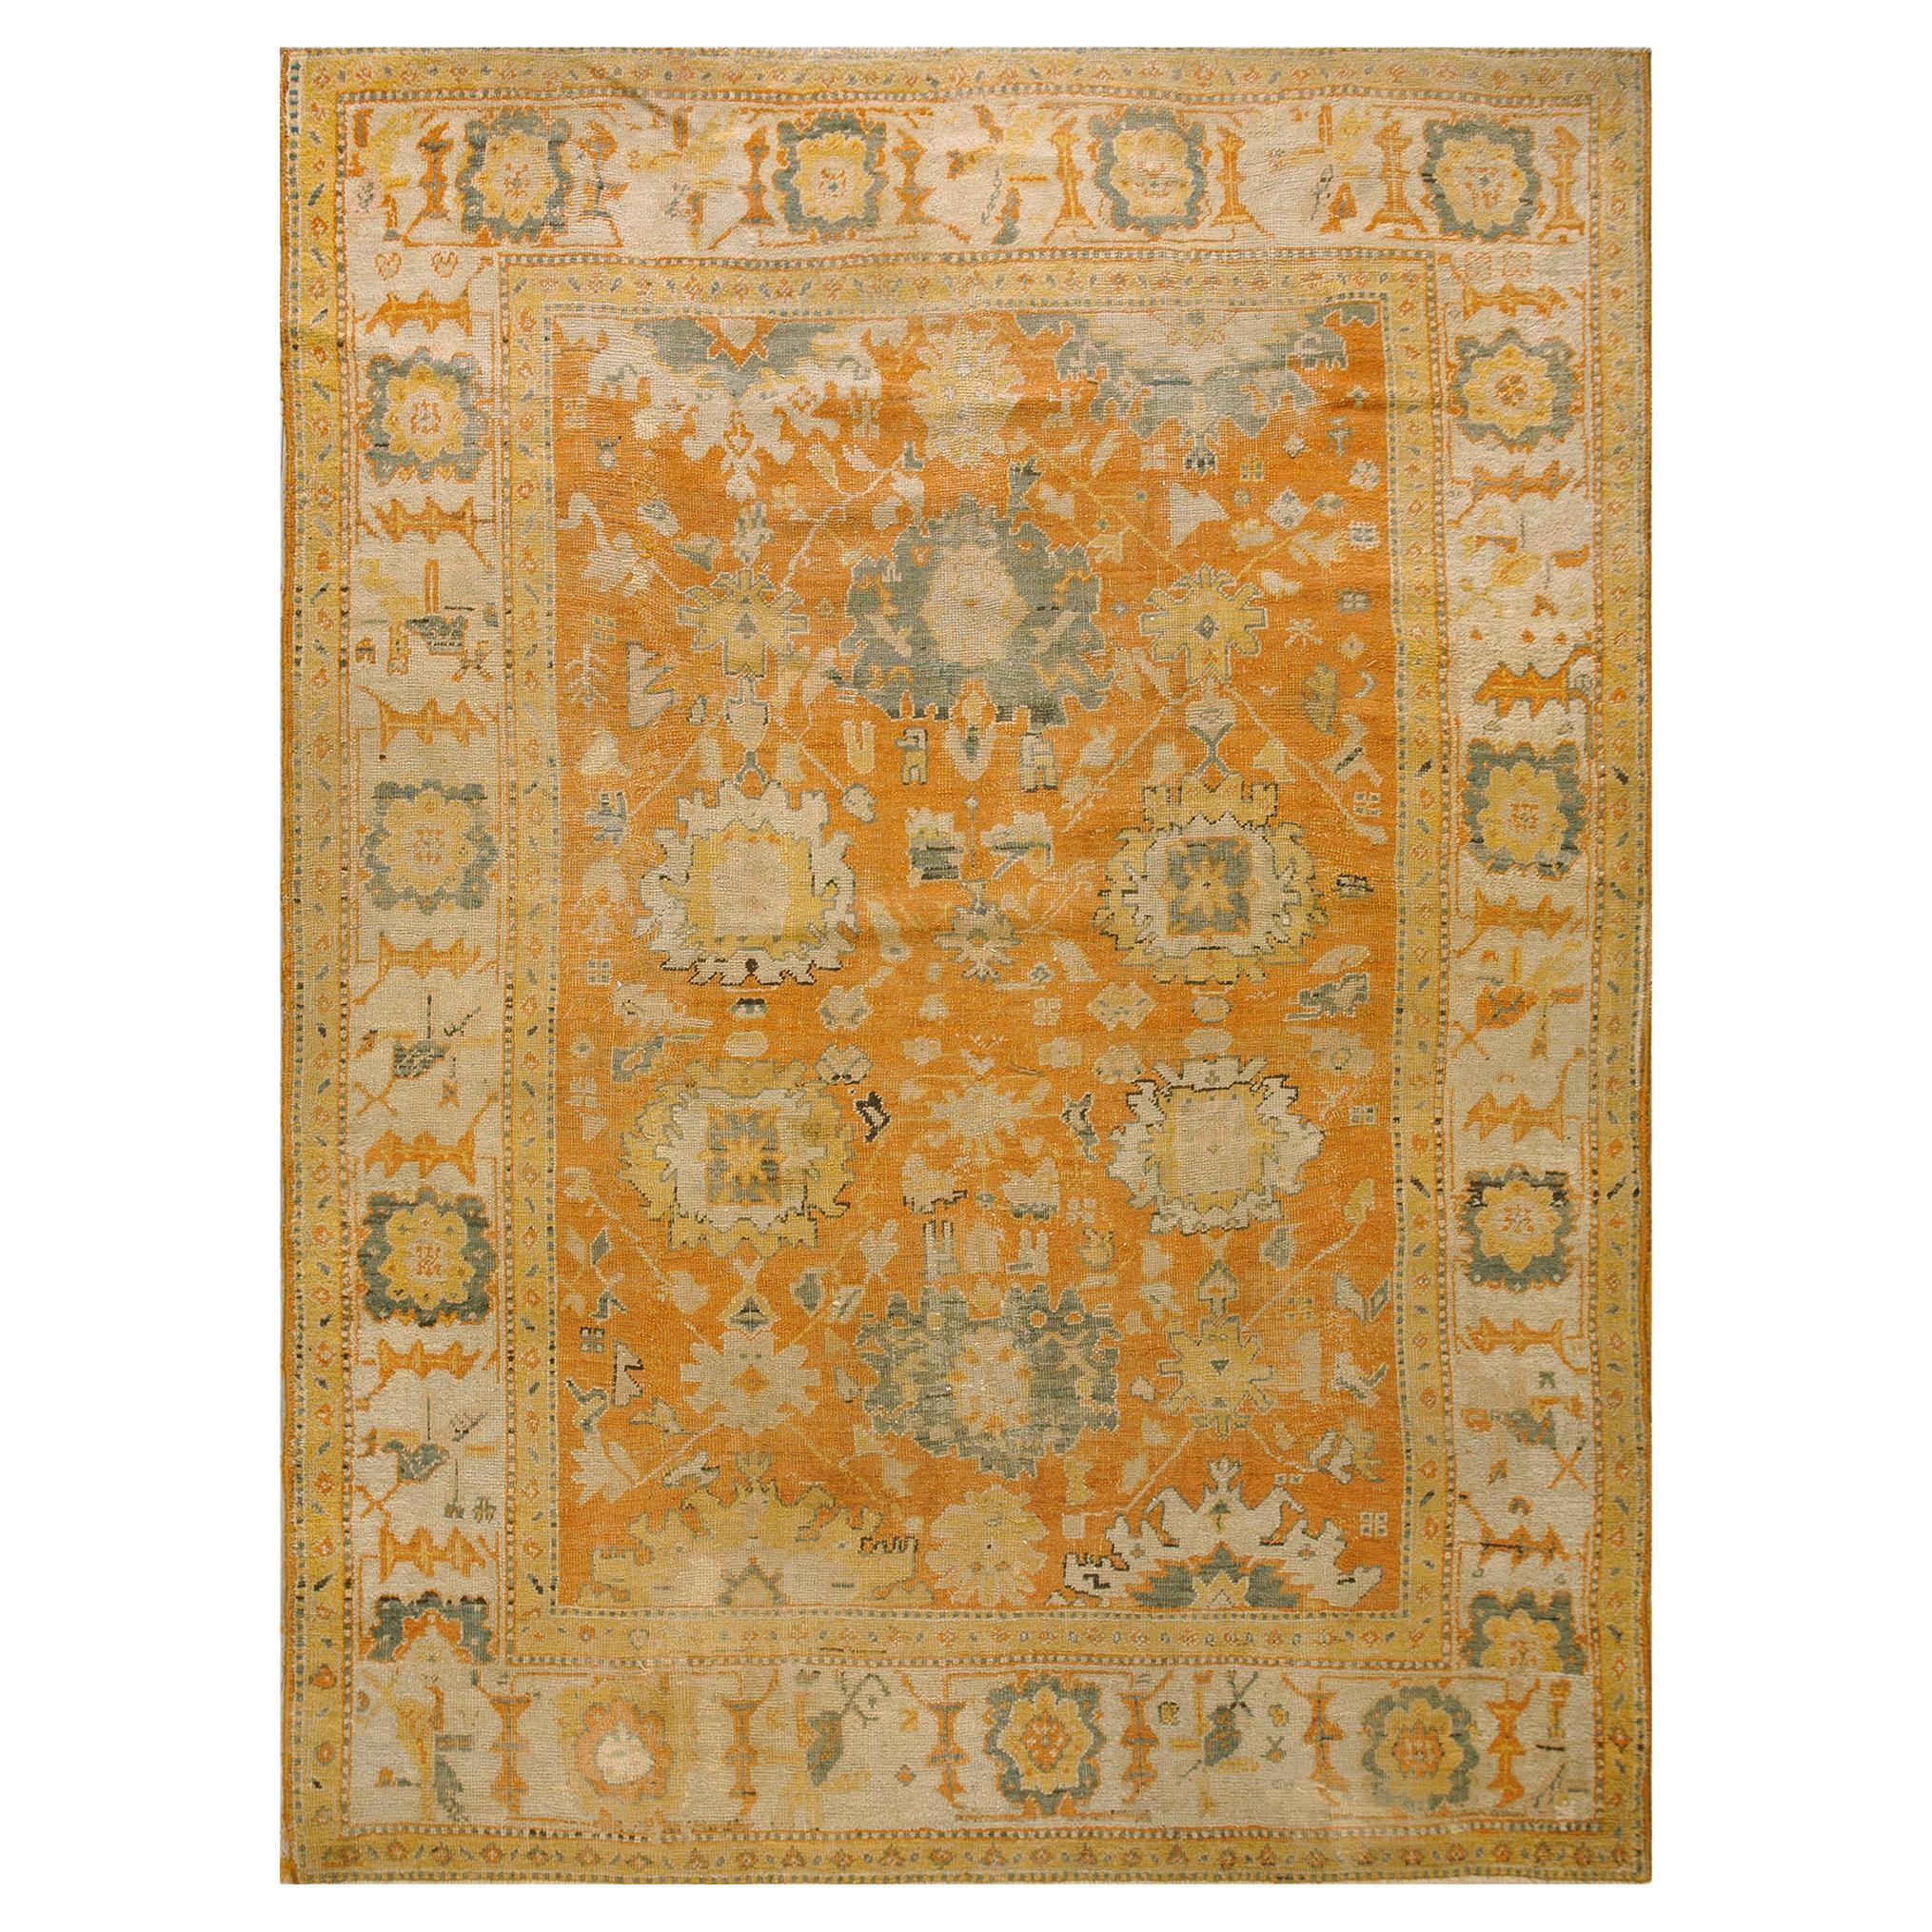 Late 19th Century Turkish Oushak Carpet ( 8'4''x 11'2'' - 254 x 340 ) For Sale